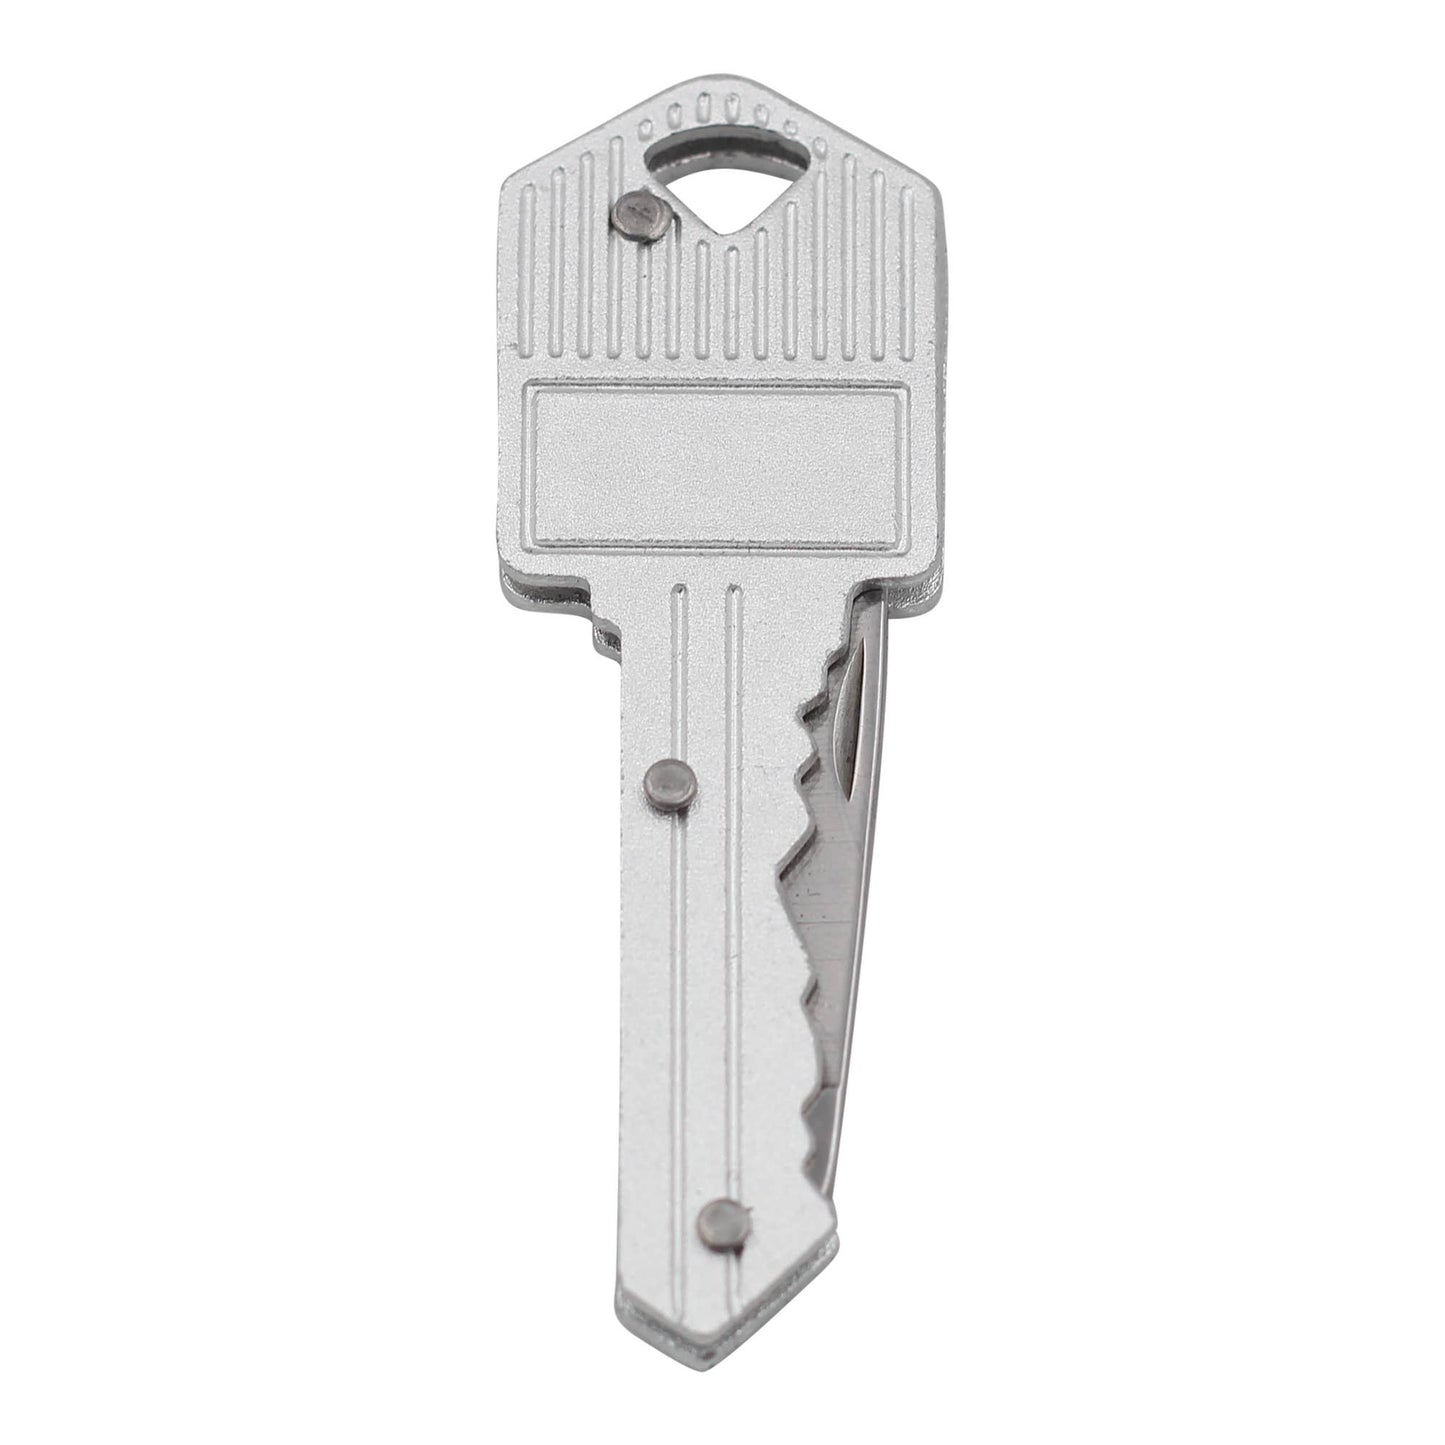 Image of Real Sic Siliver Key Knife Keychain – Small Utility Pocketknife - 2'' Blade